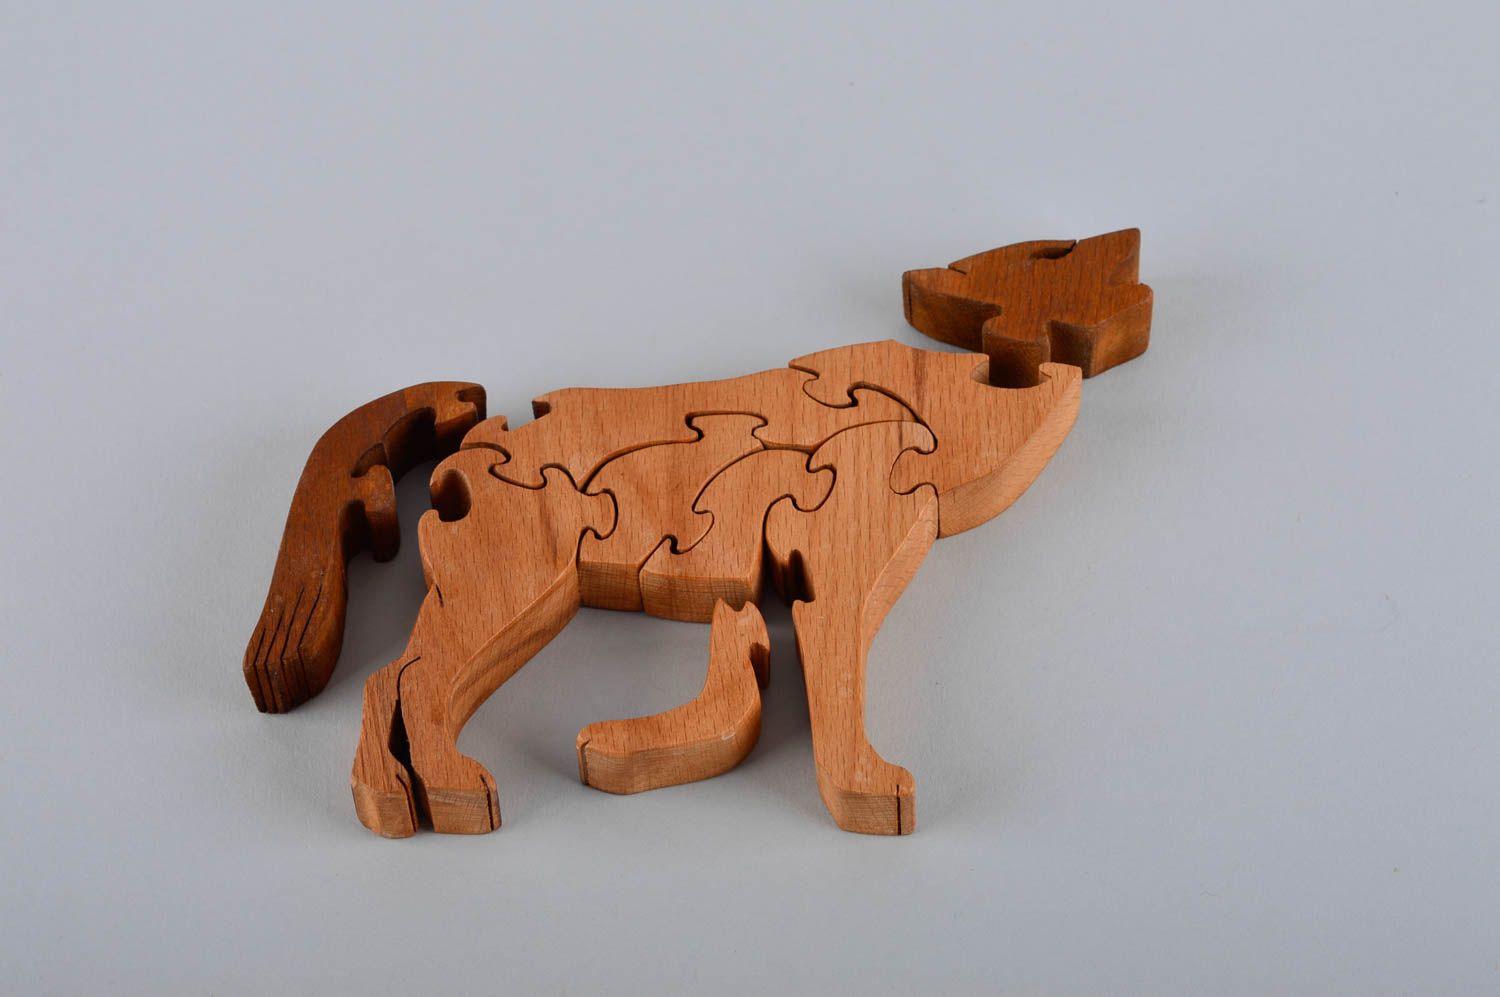 Handmade puzzle unusual toy gift ideas wooden toy designer toy nurdery decor photo 5